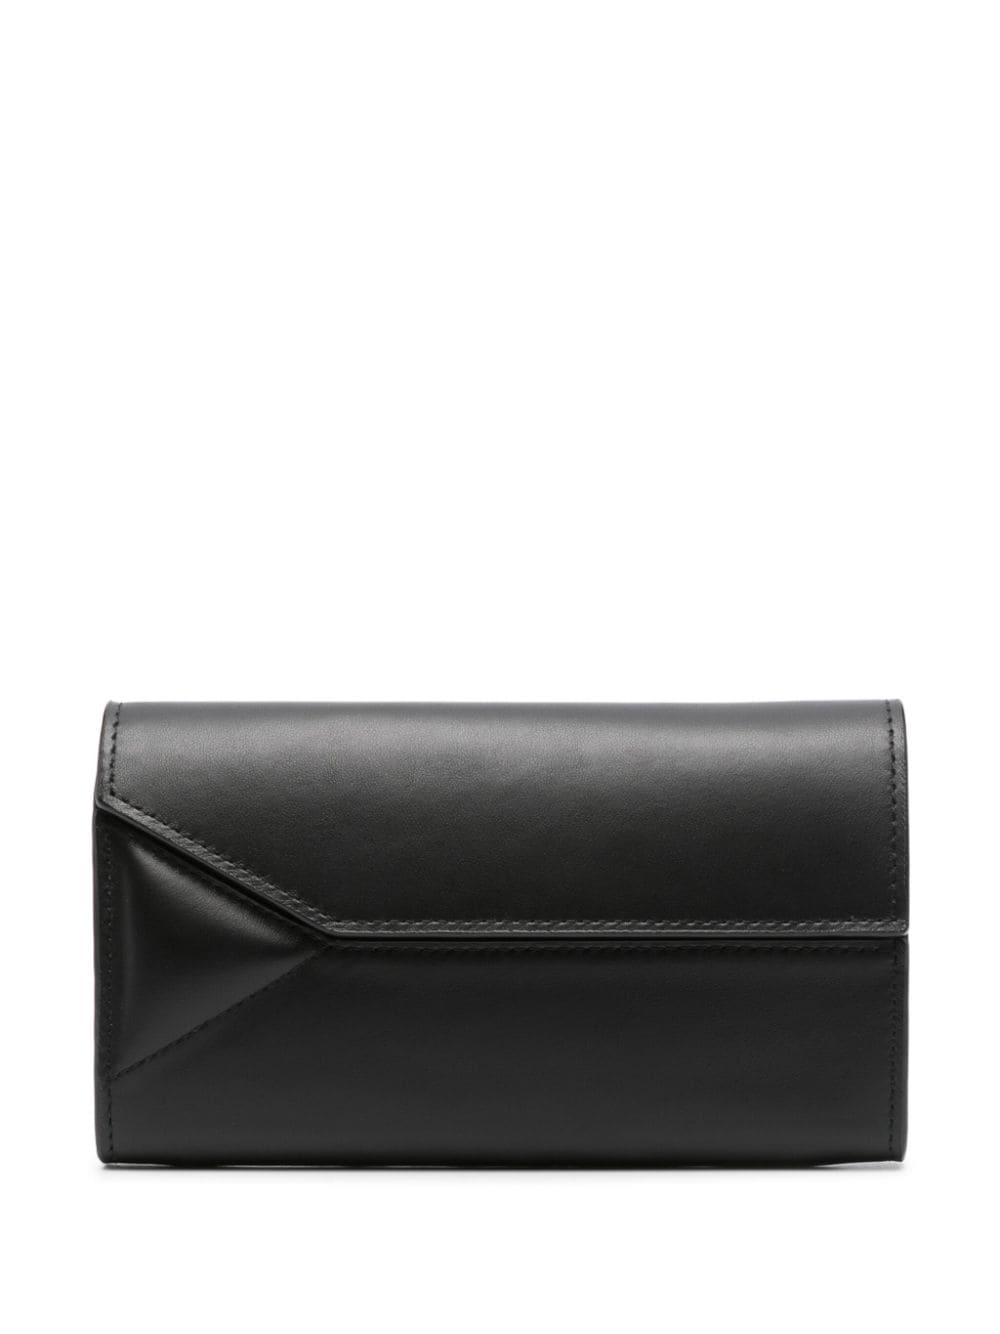 Wandler Oscar leather wallet - Black von Wandler